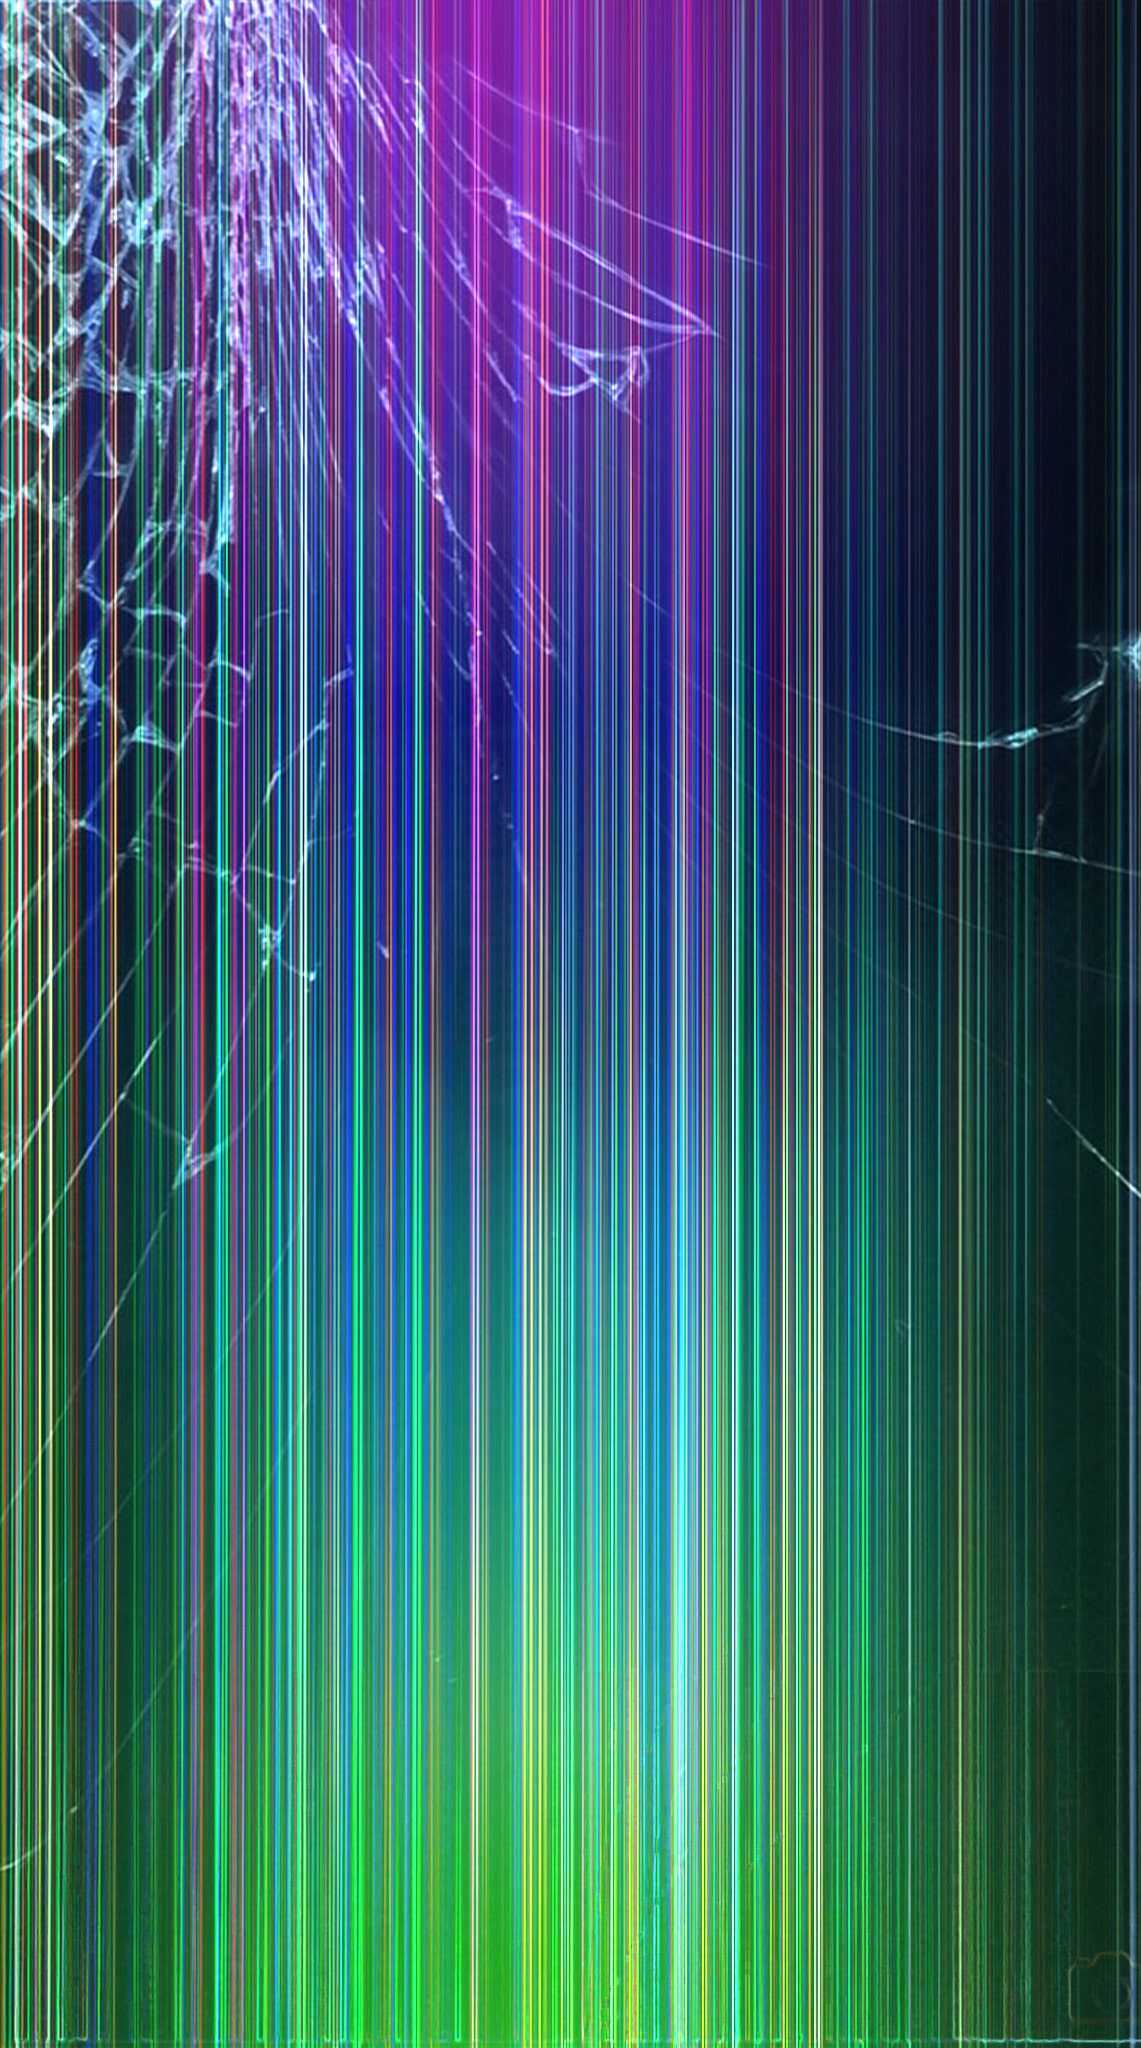 Broken Phone Wallpaper - NawPic